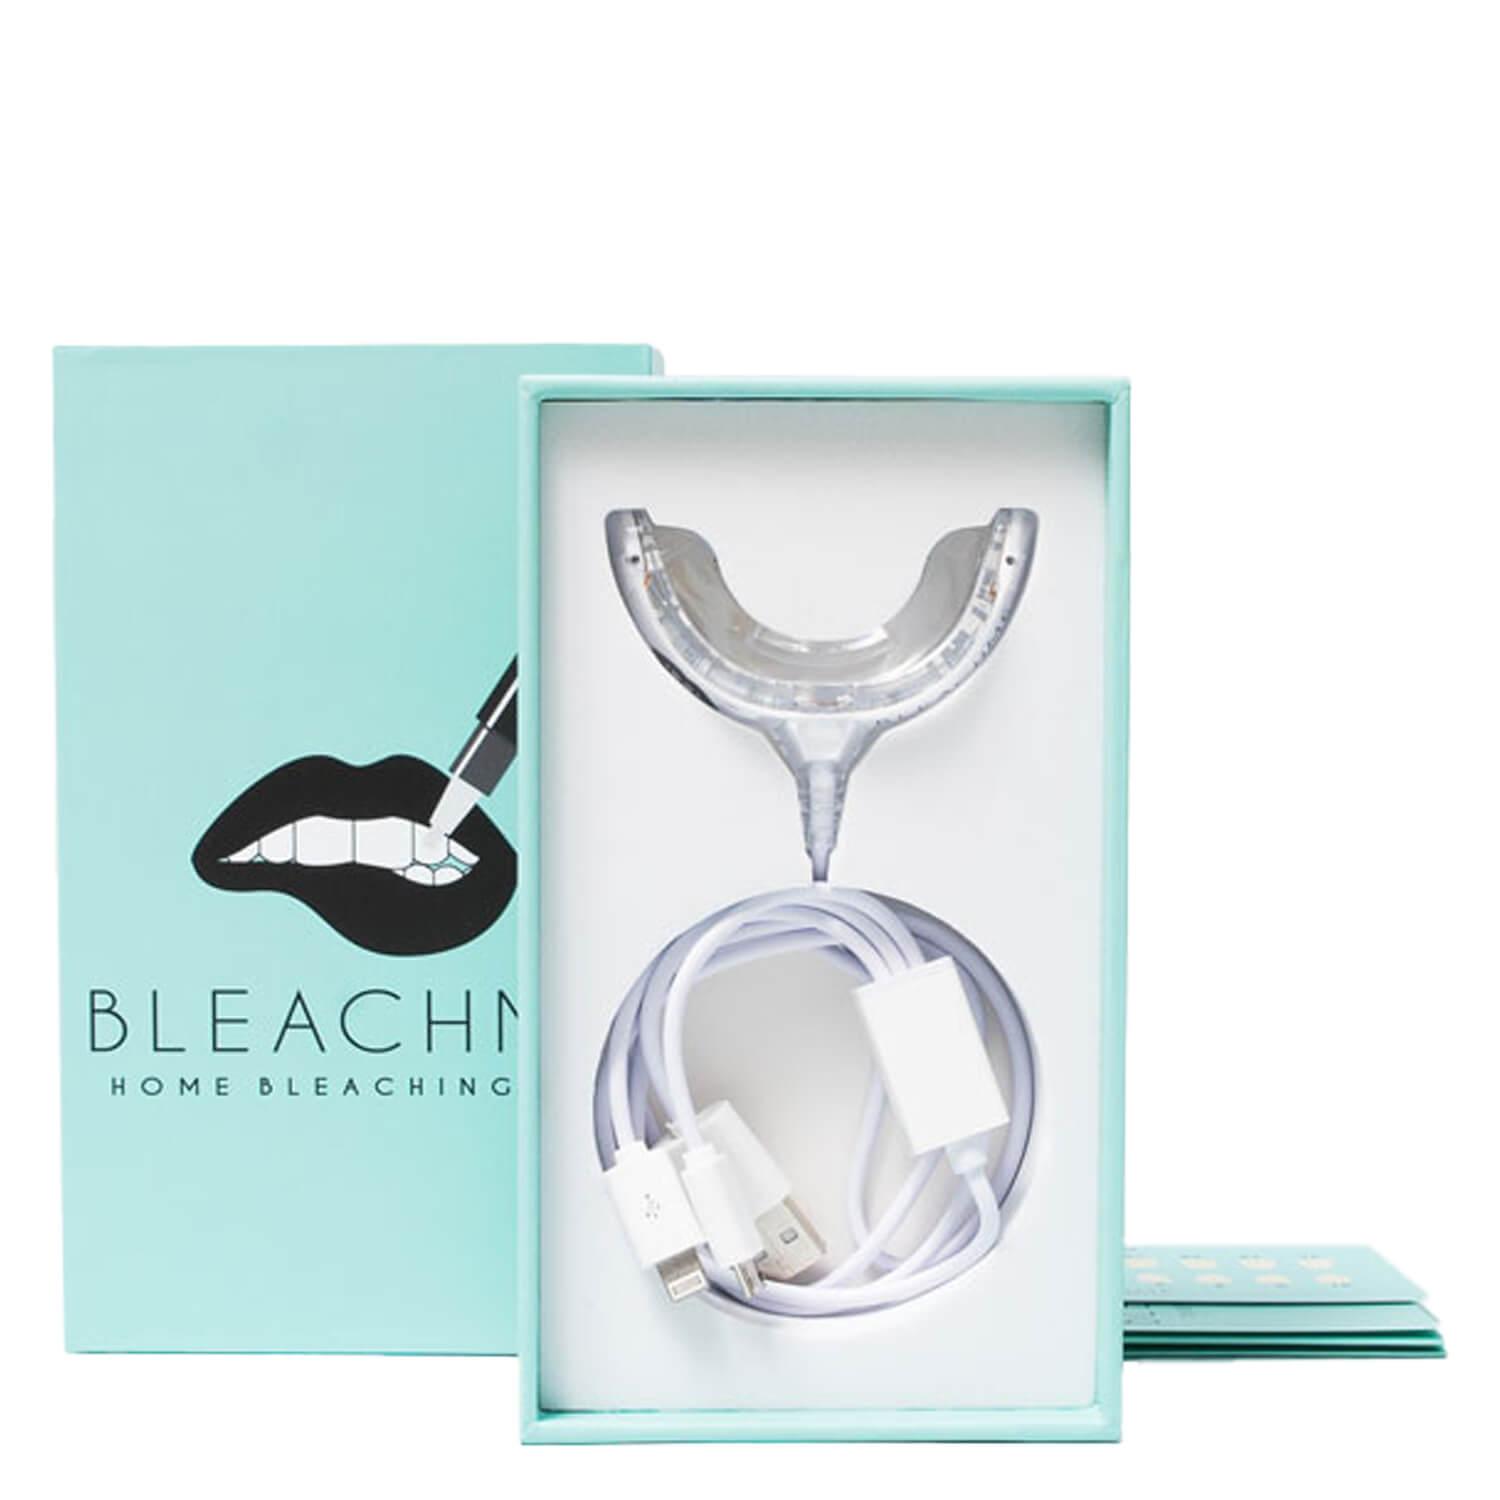 BleachMe - Teeth Whitening Kit